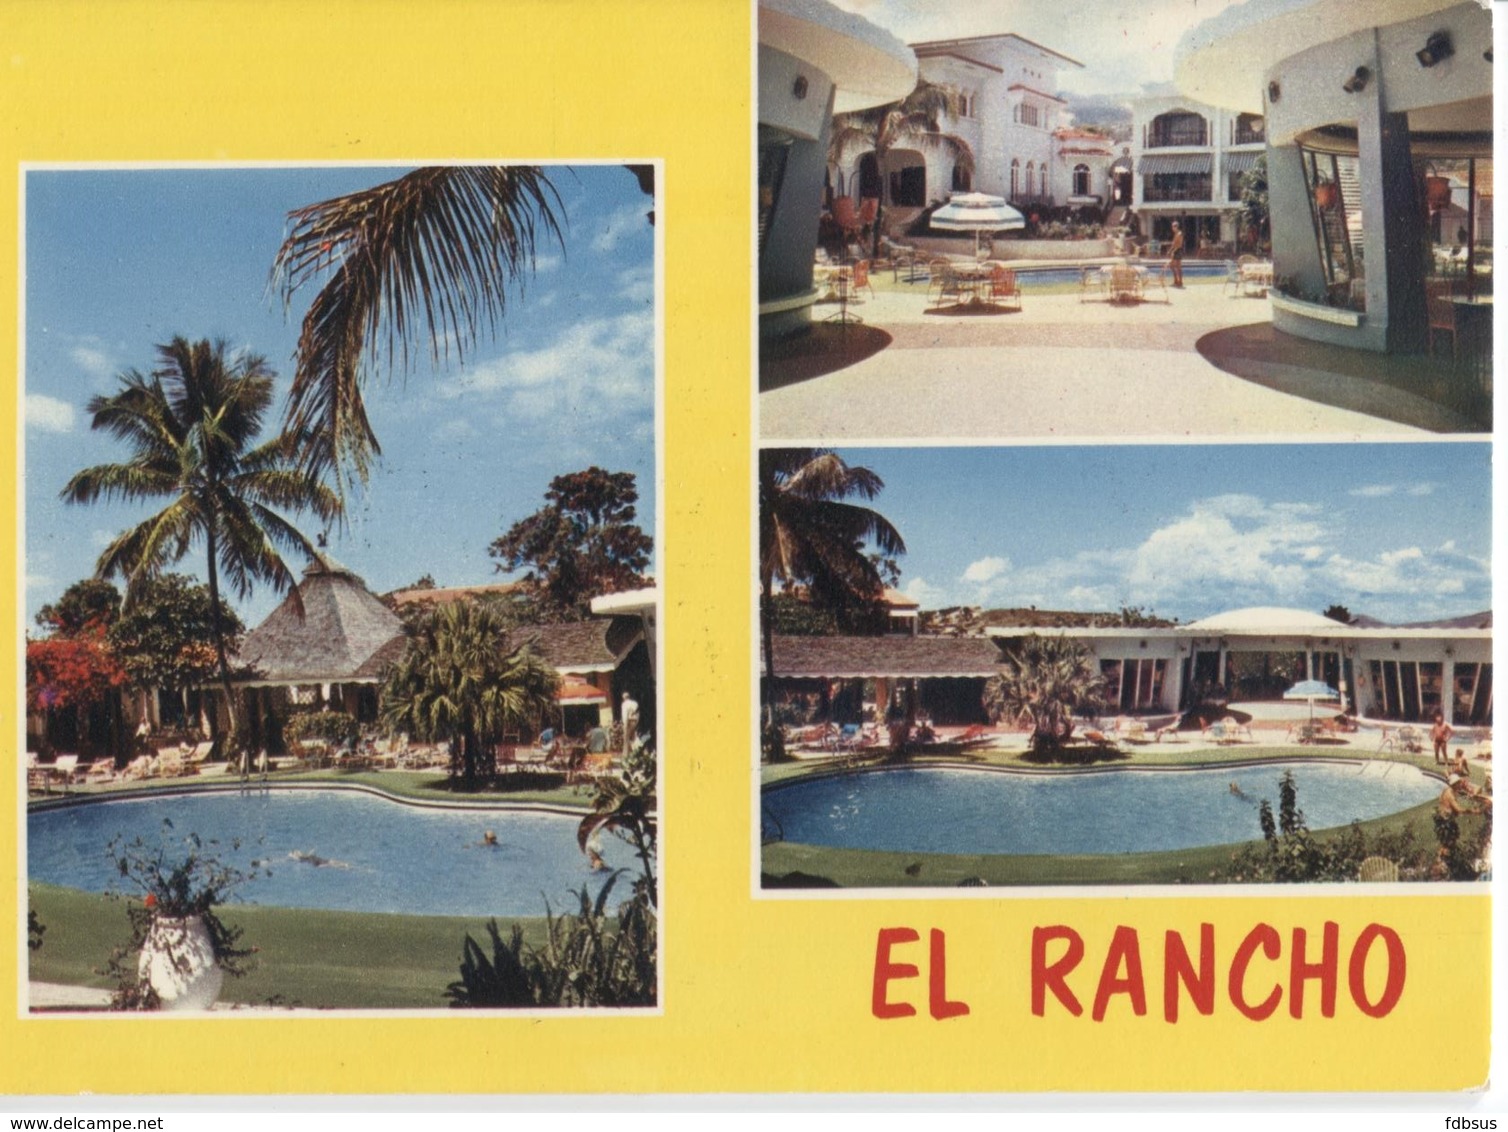 Haiti El Rancho Hotel - 3 Photo's On Card - Haiti